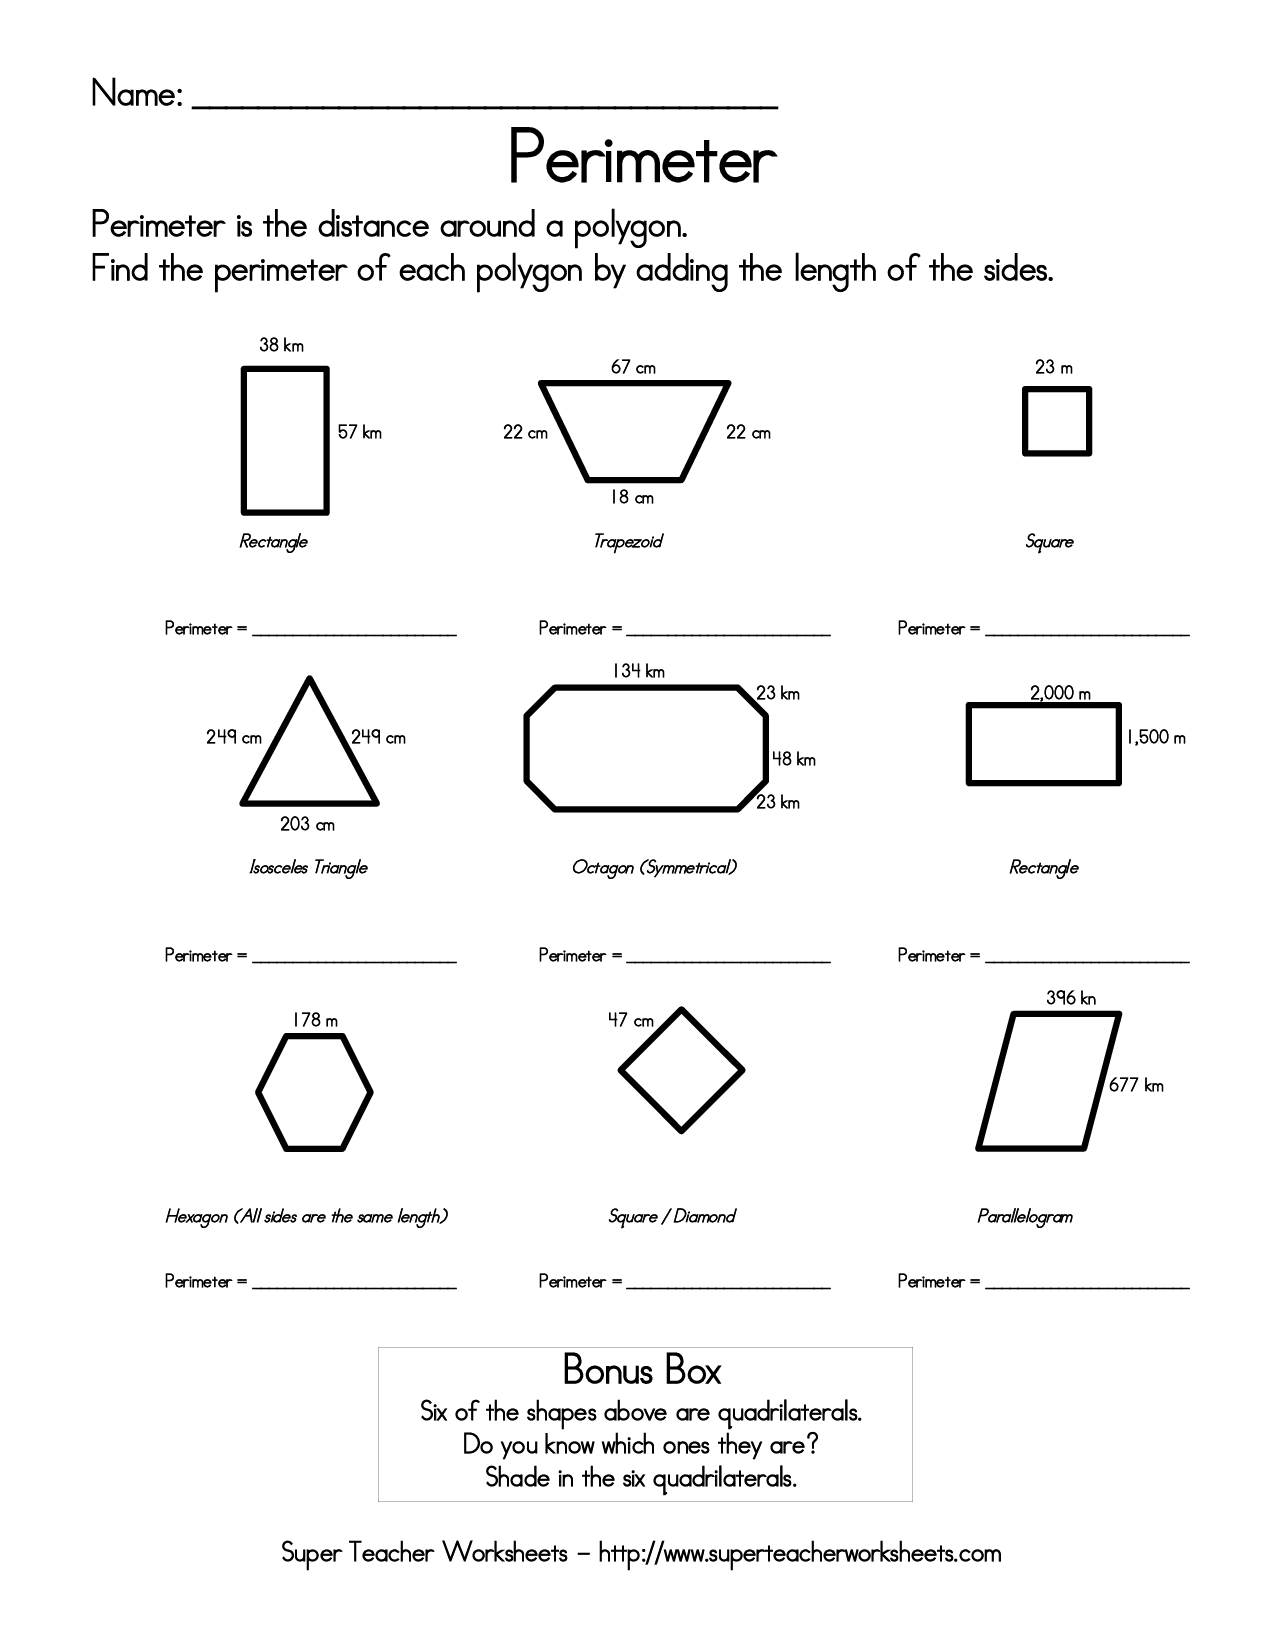 Perimeter of Polygons Worksheet 3rd Grade Image